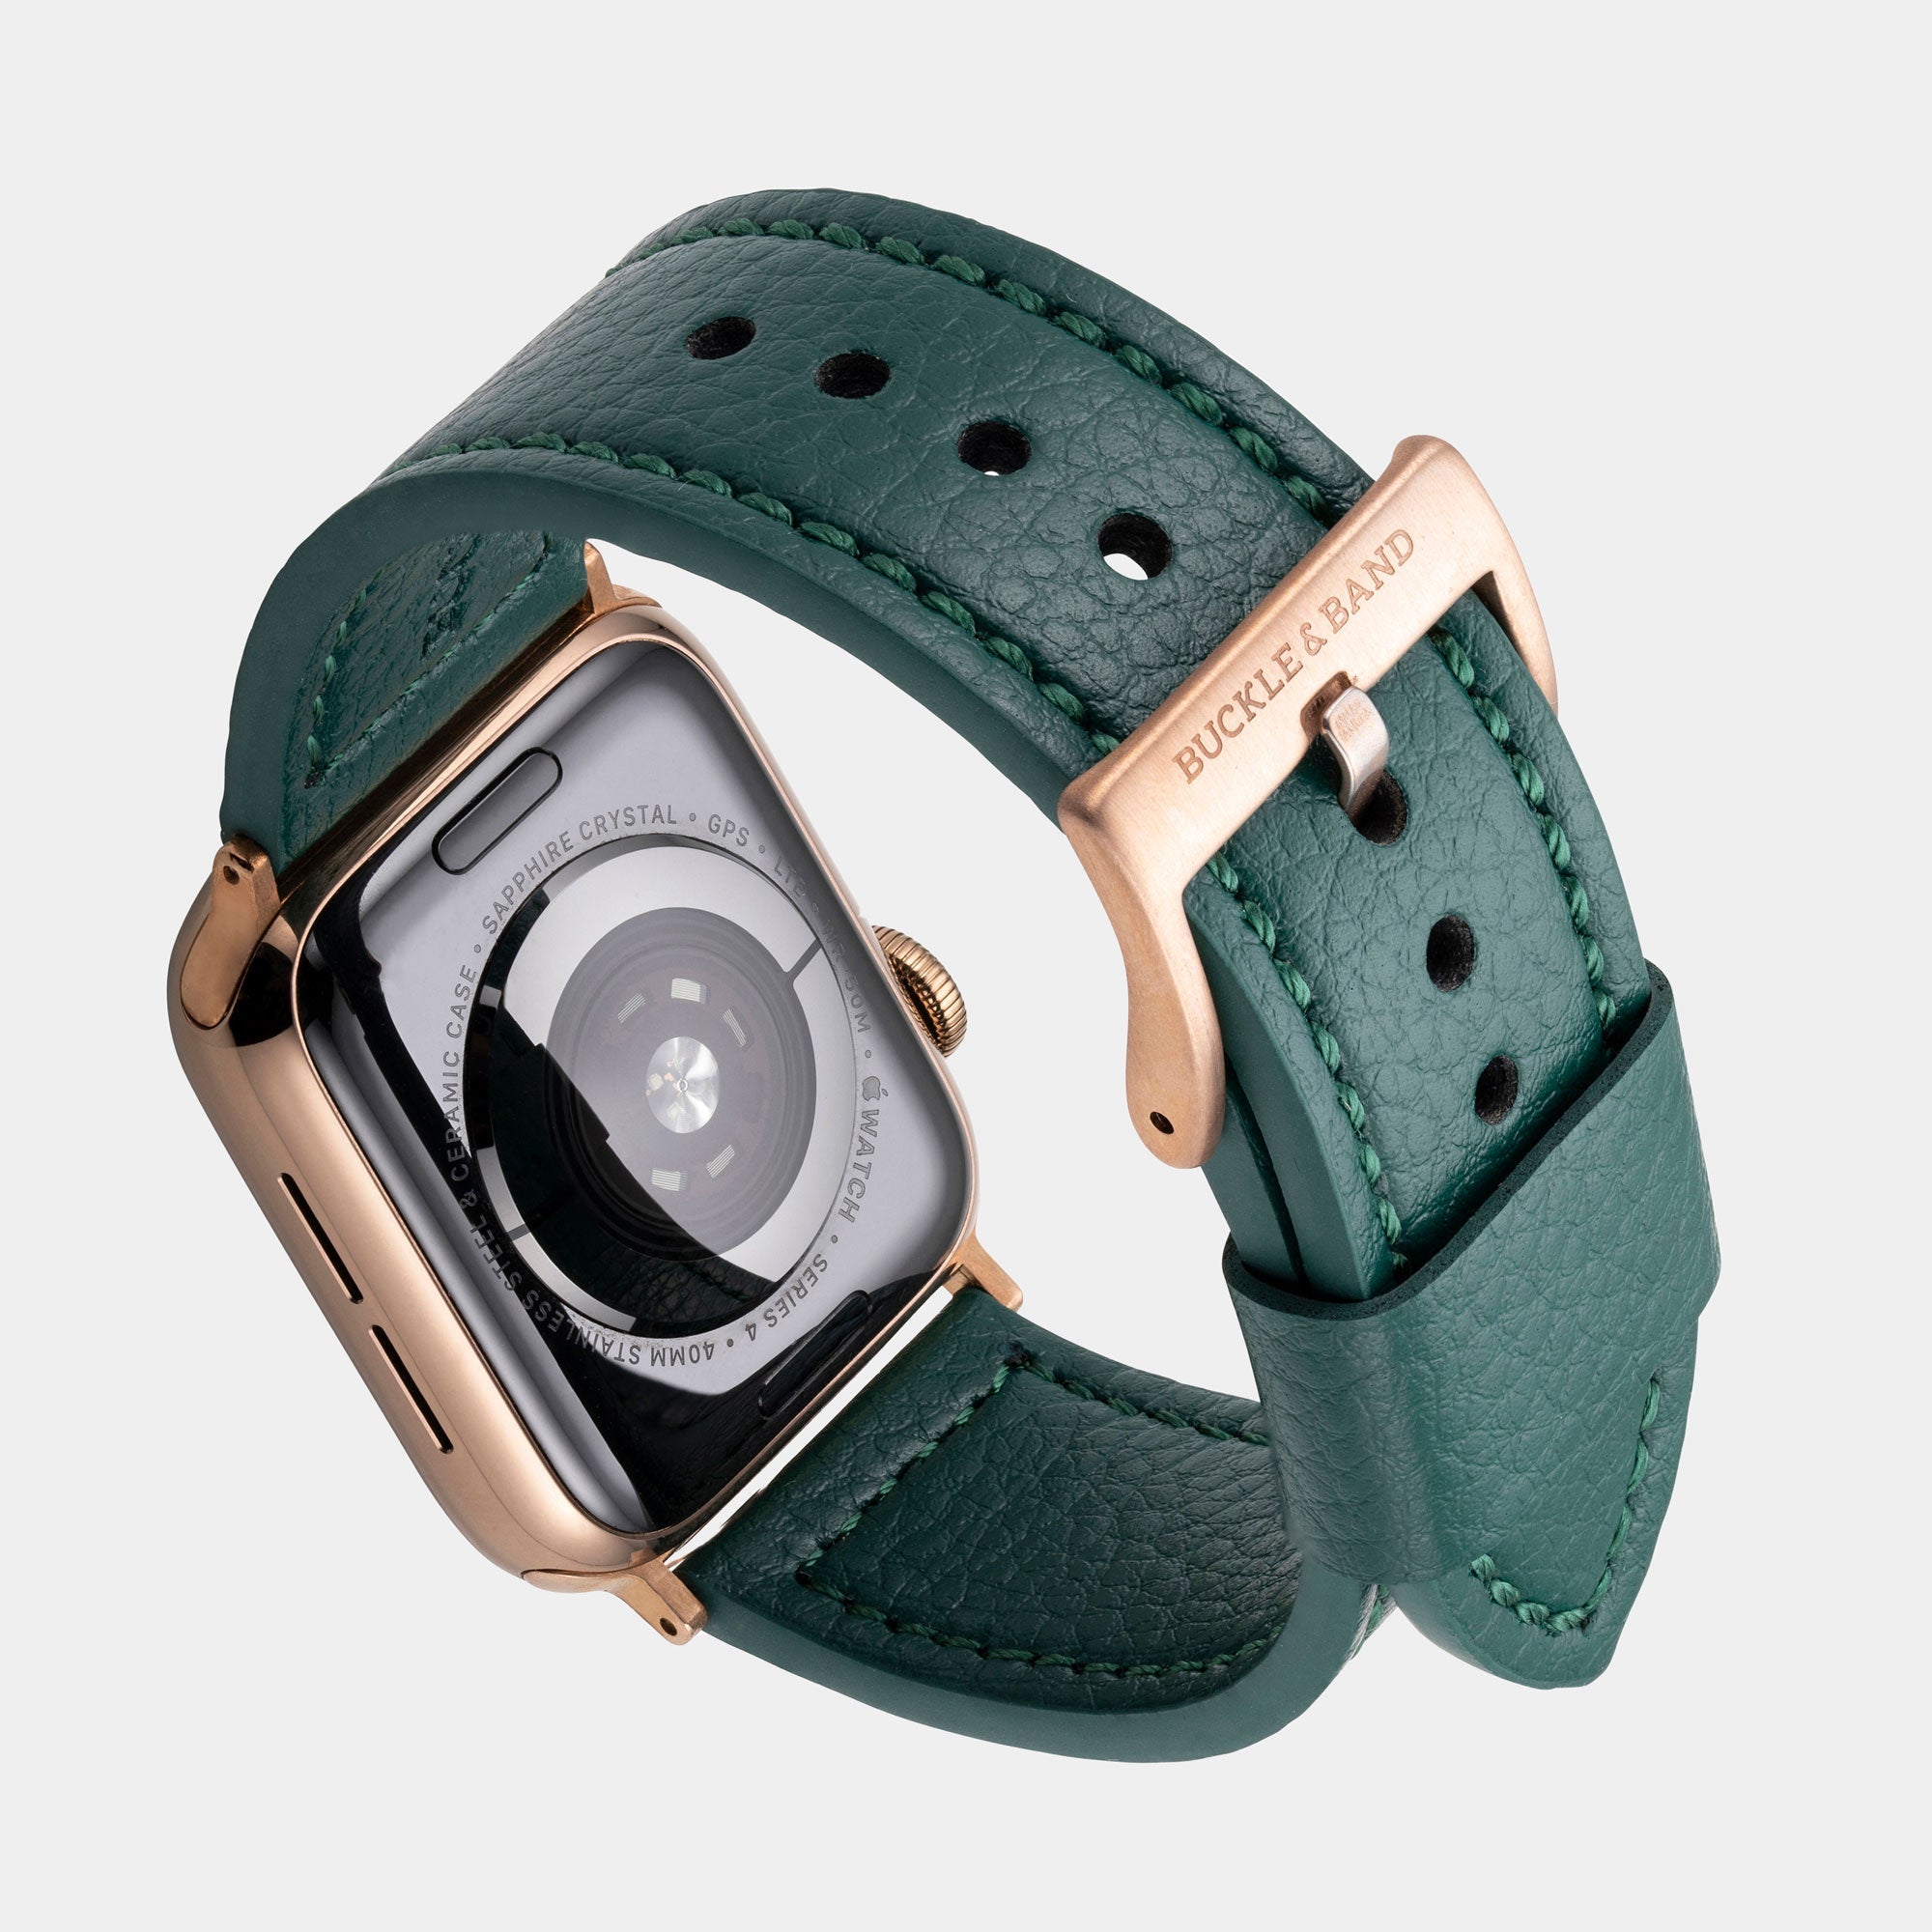 Vegan Leather Apple Watch Strap - Luxury Lond Green - Buckle & Band - VEG-38-GRE-GL